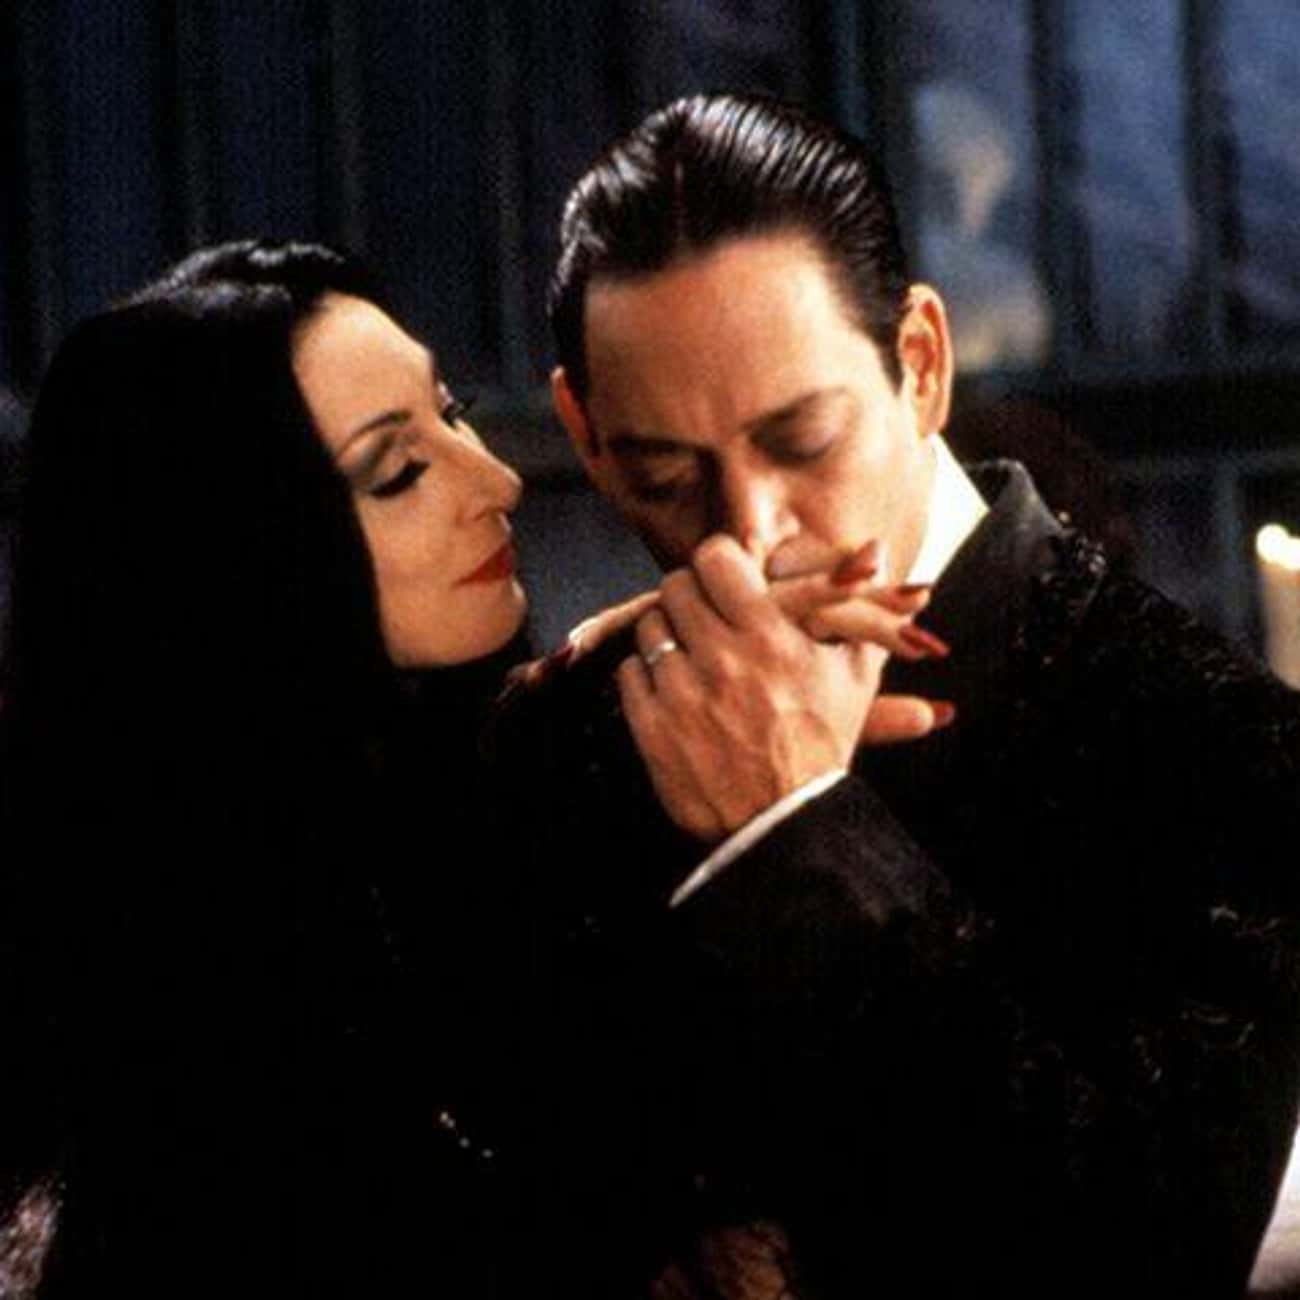 Morticia and Gomez Addams - 'The Addams Family'